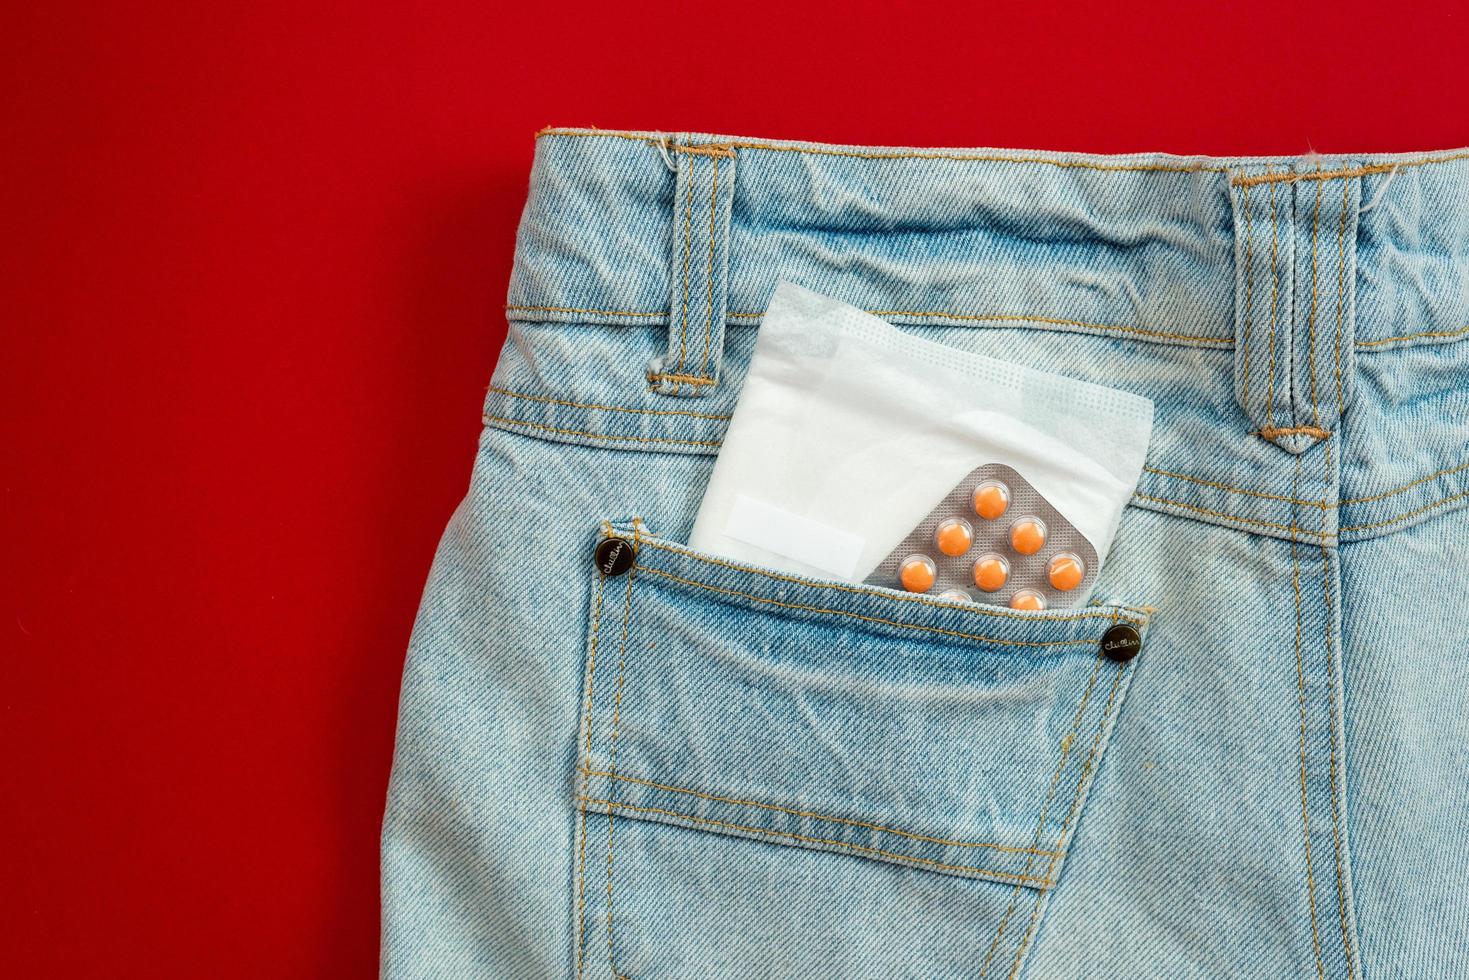 Women's sanitary napkin in the pocket of jeans. photo